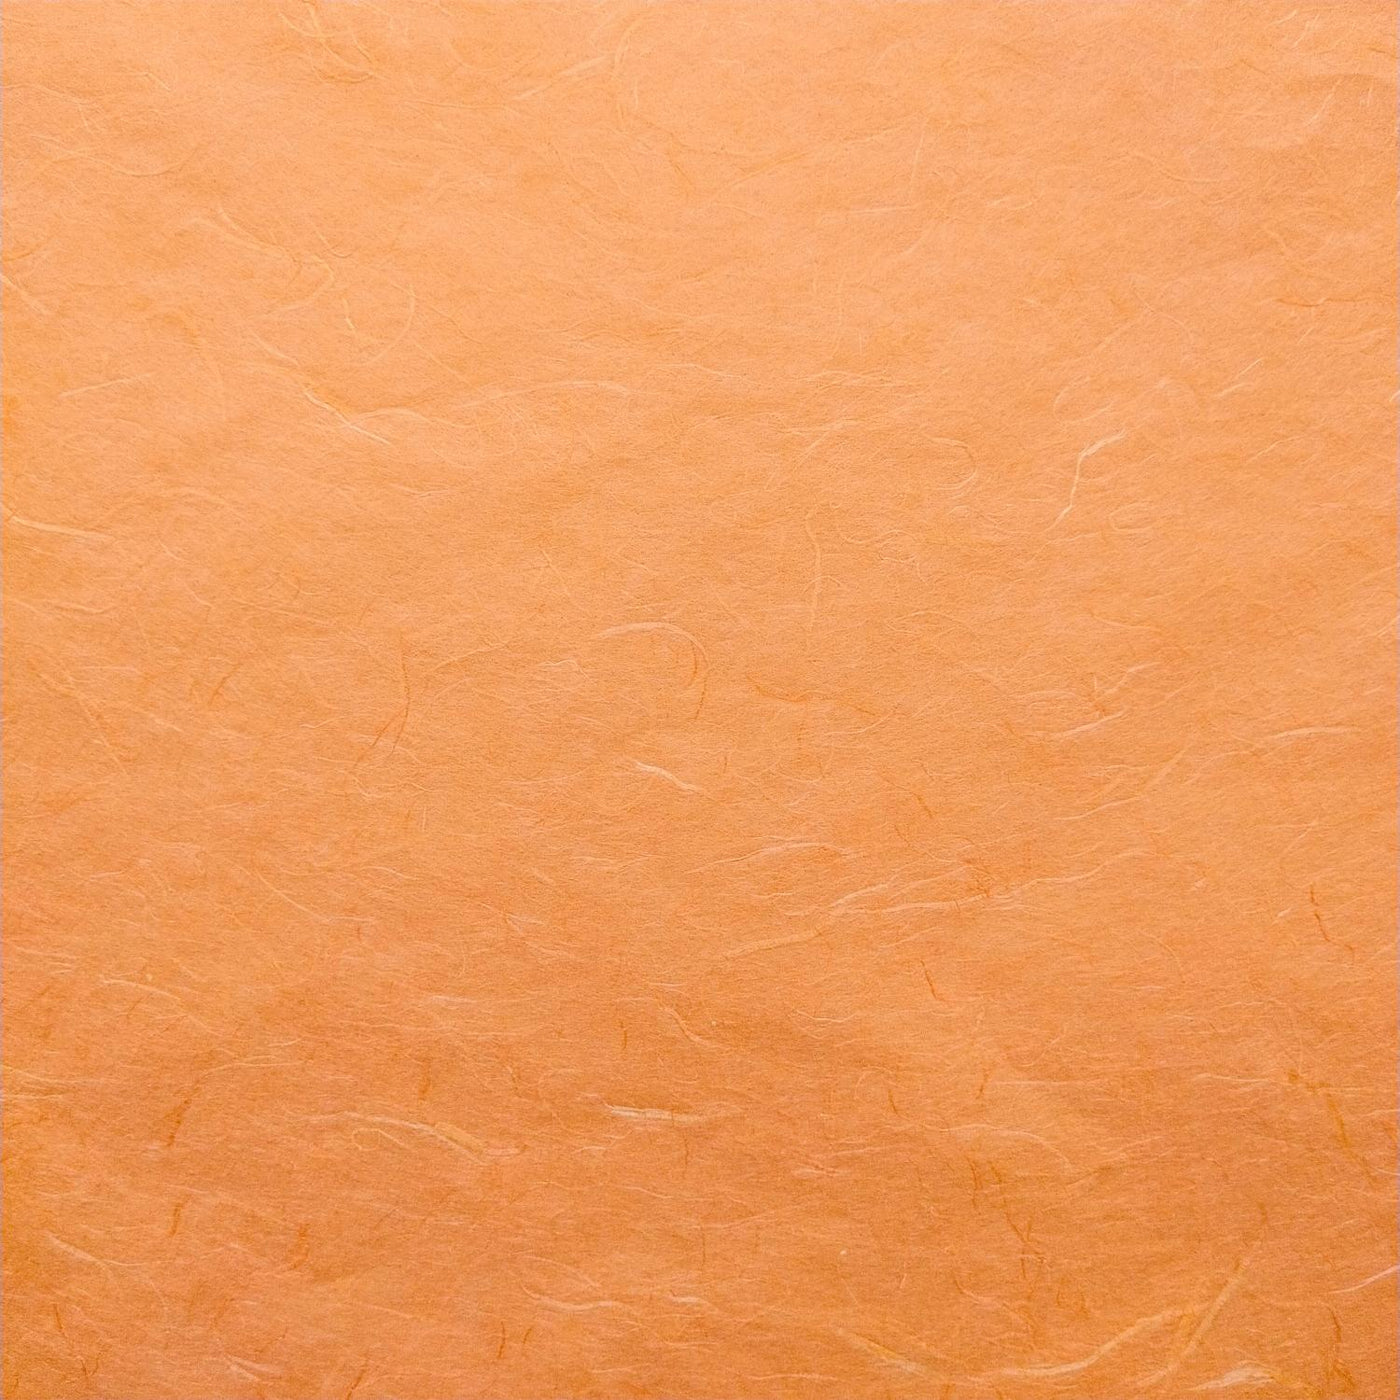 Unryu Kozo Mulberry Paper (Tangerine Orange)